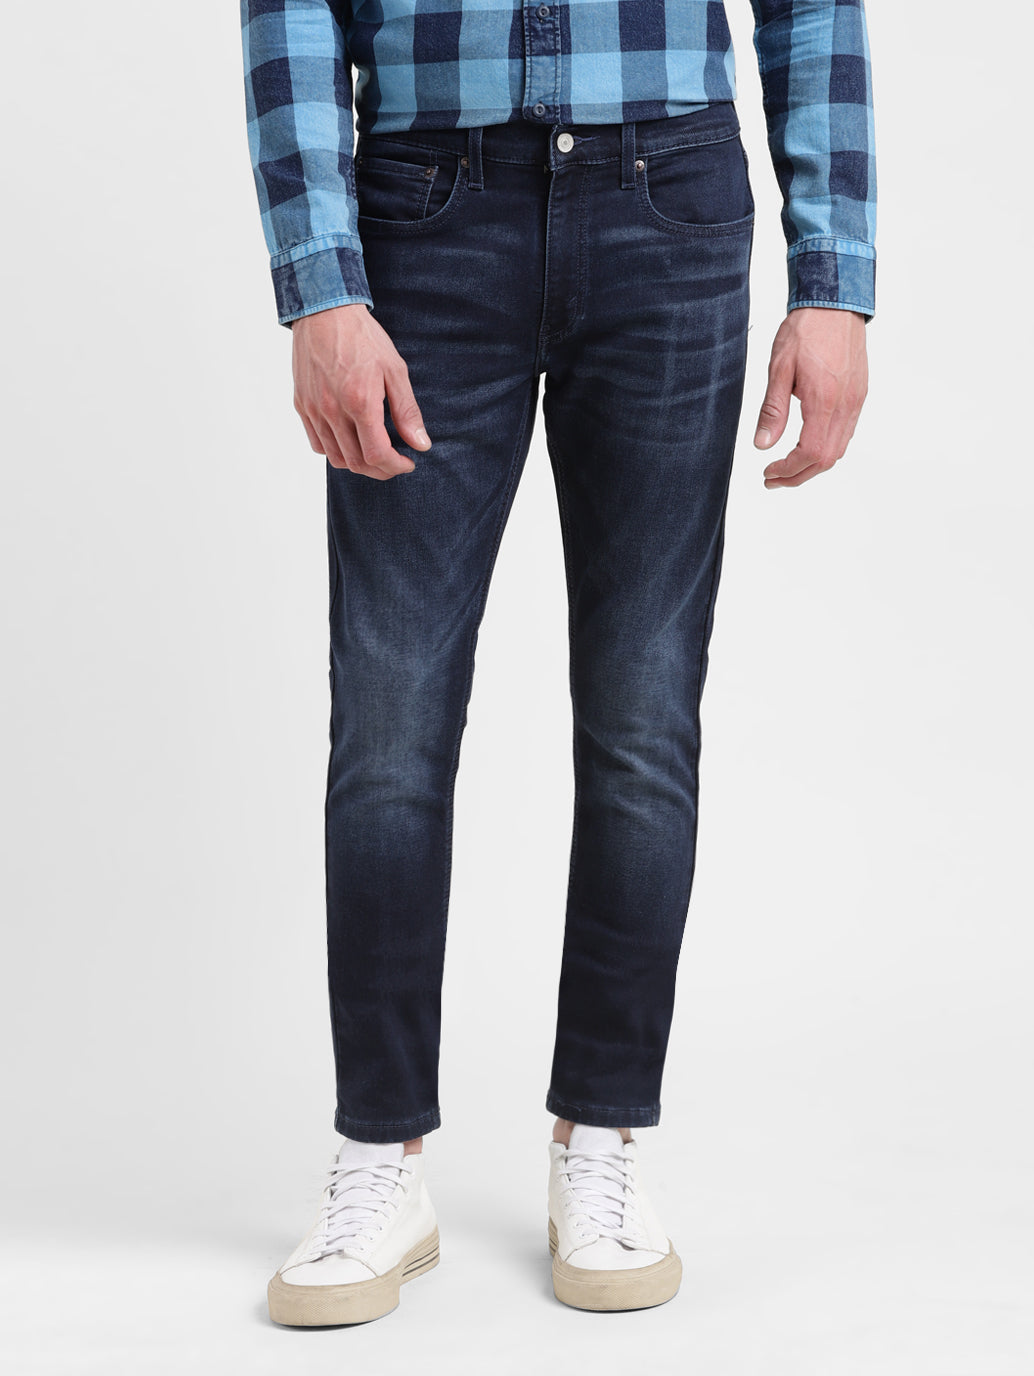 Men's Skinny Tapered Blue Jeans